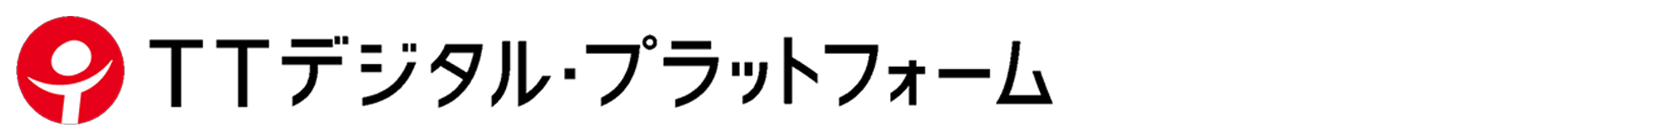 TTデジタルプラットフォームのロゴ